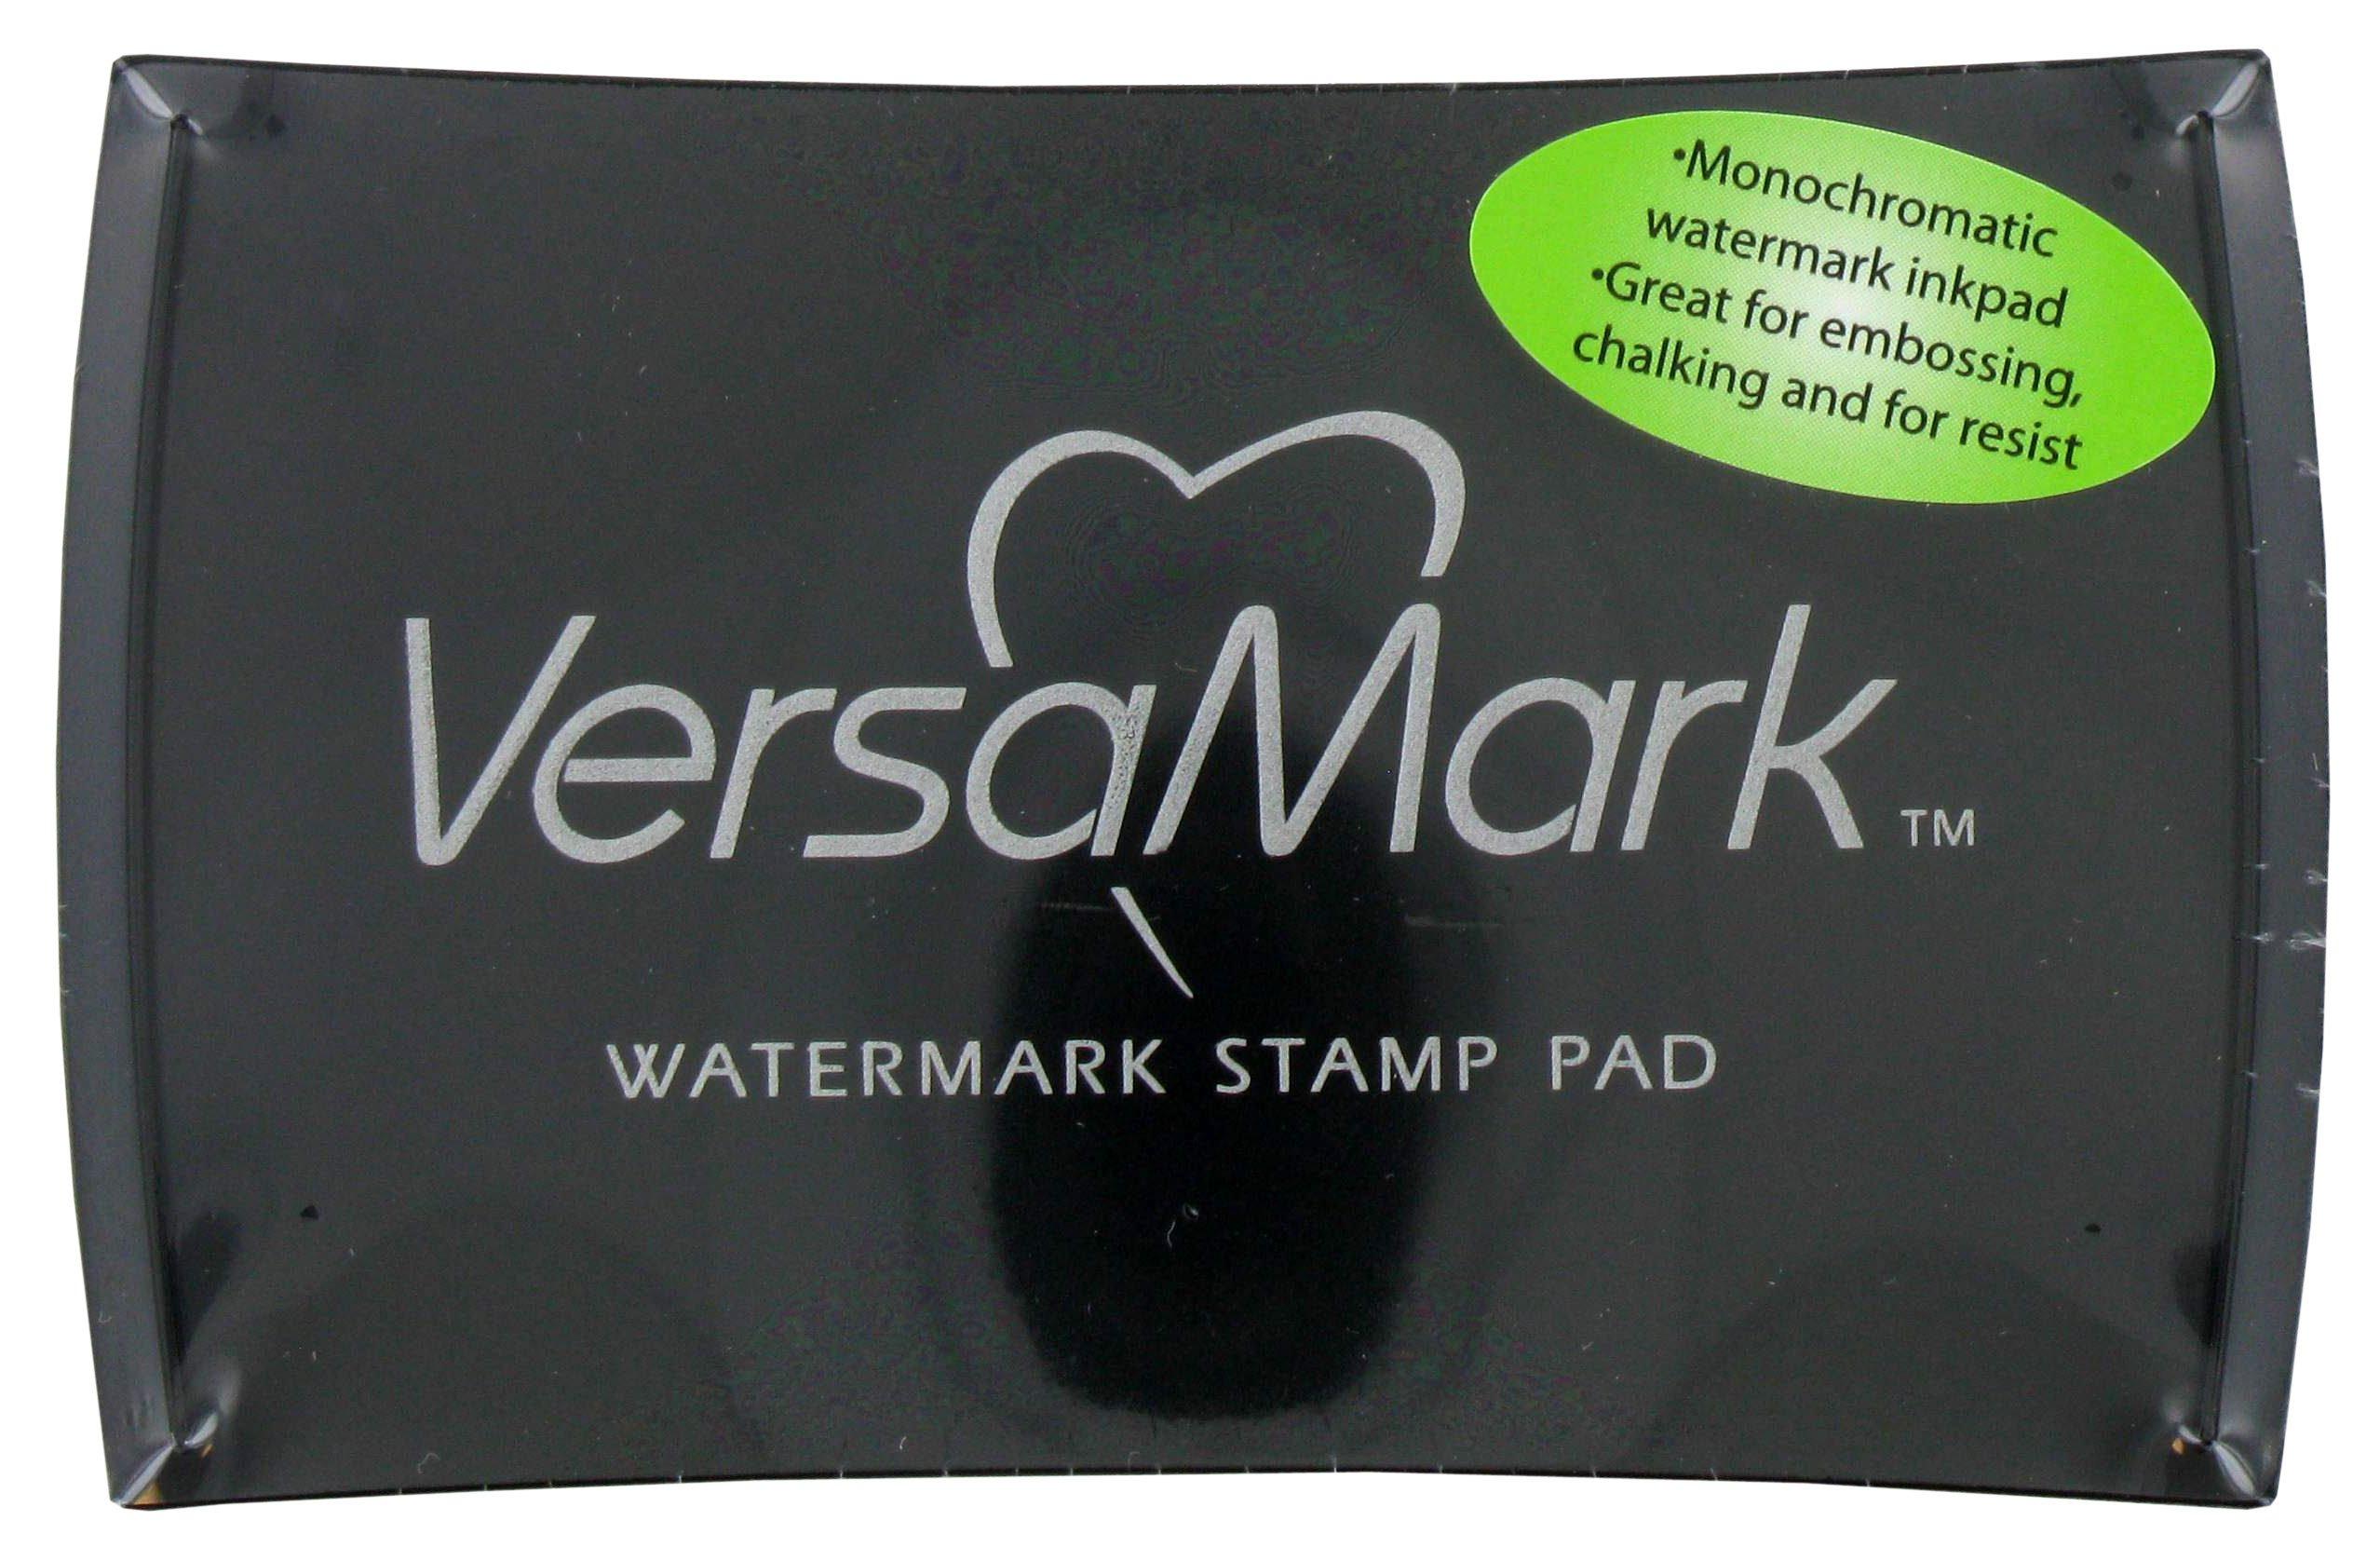 VersaFine Pigment Ink Pad - SMOKEY GRAY Fine Stamp Pad – Hallmark Scrapbook